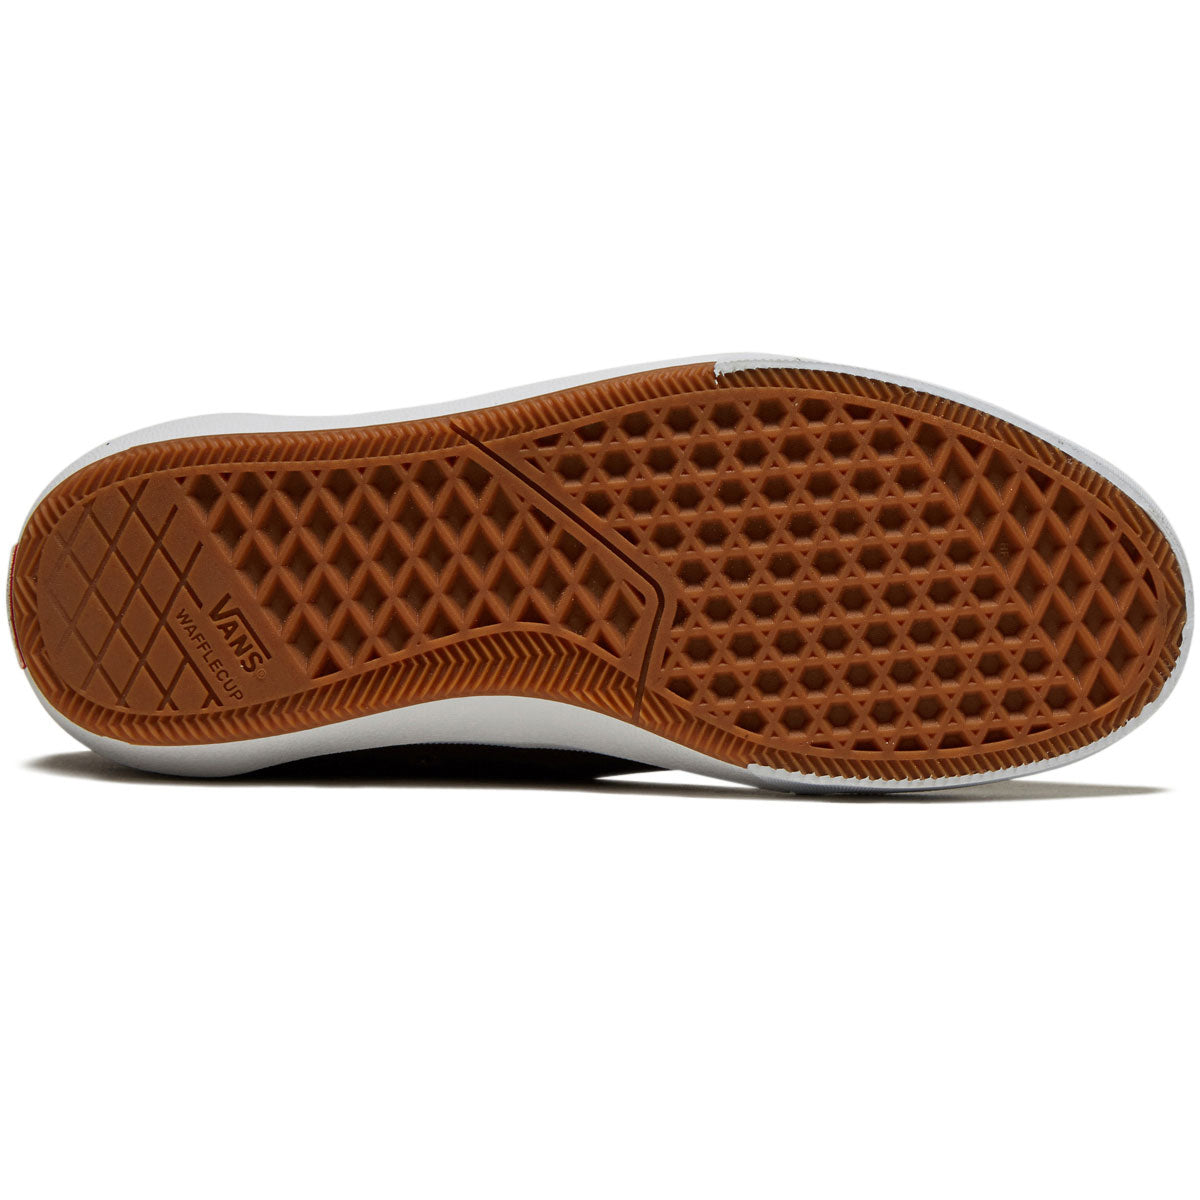 Vans Gilbert Crockett Shoes - Dark Brown image 4